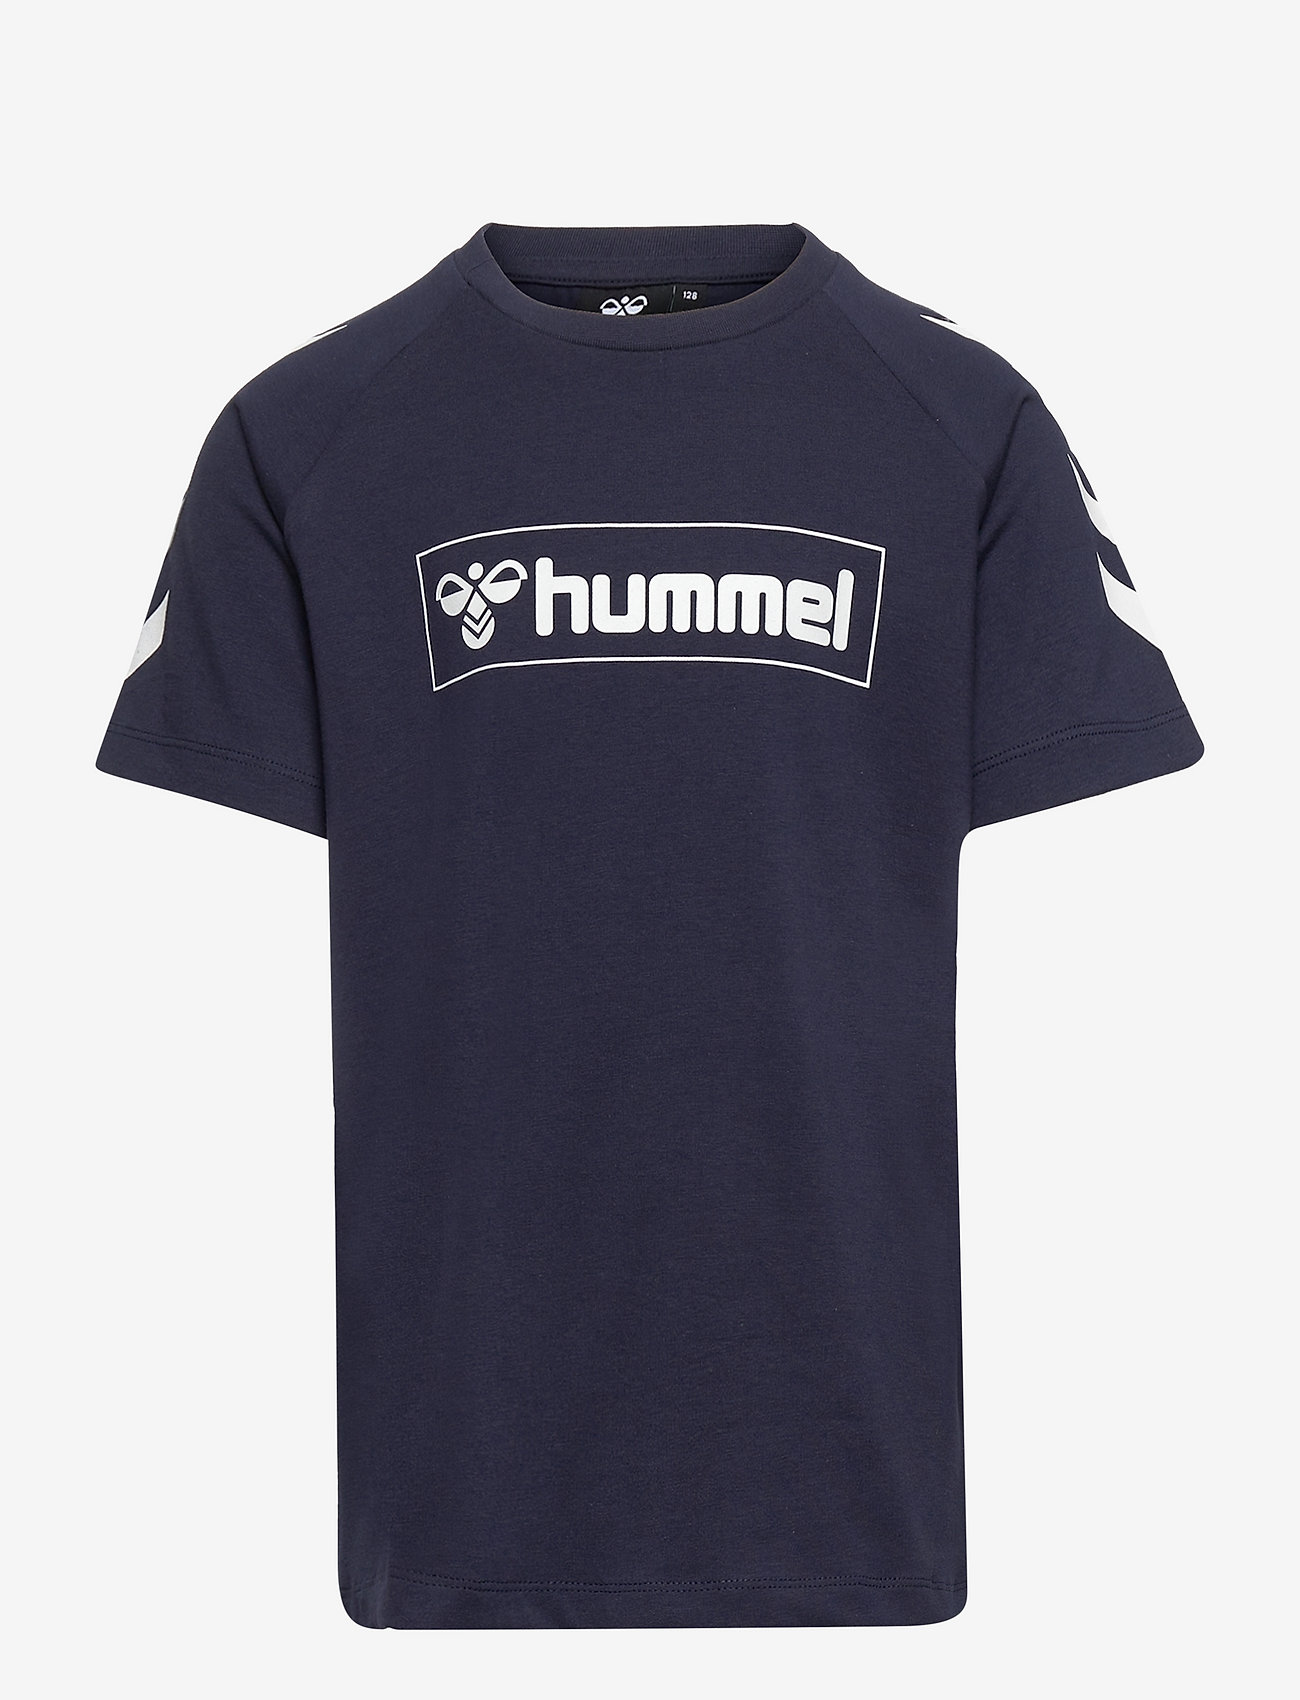 Hummel - hmlBOX T-SHIRT S/S - kurzärmelig - black iris - 0